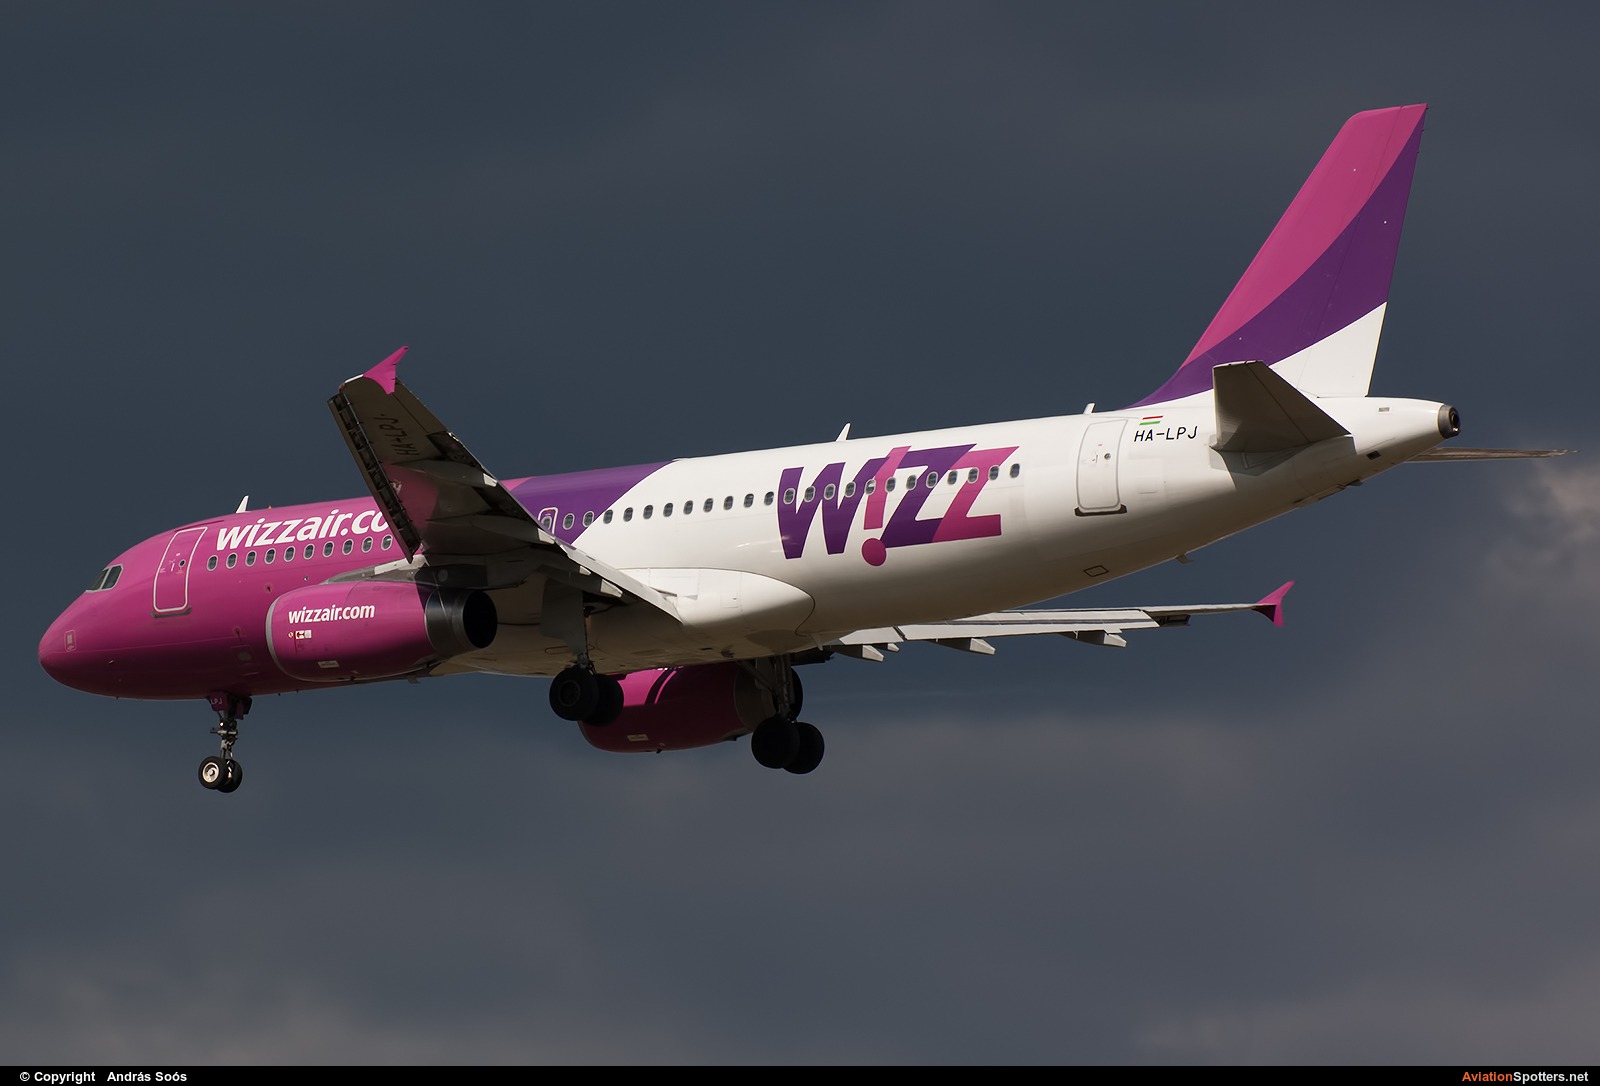 Wizz Air  -  A320  (HA-LPJ) By András Soós (sas1965)